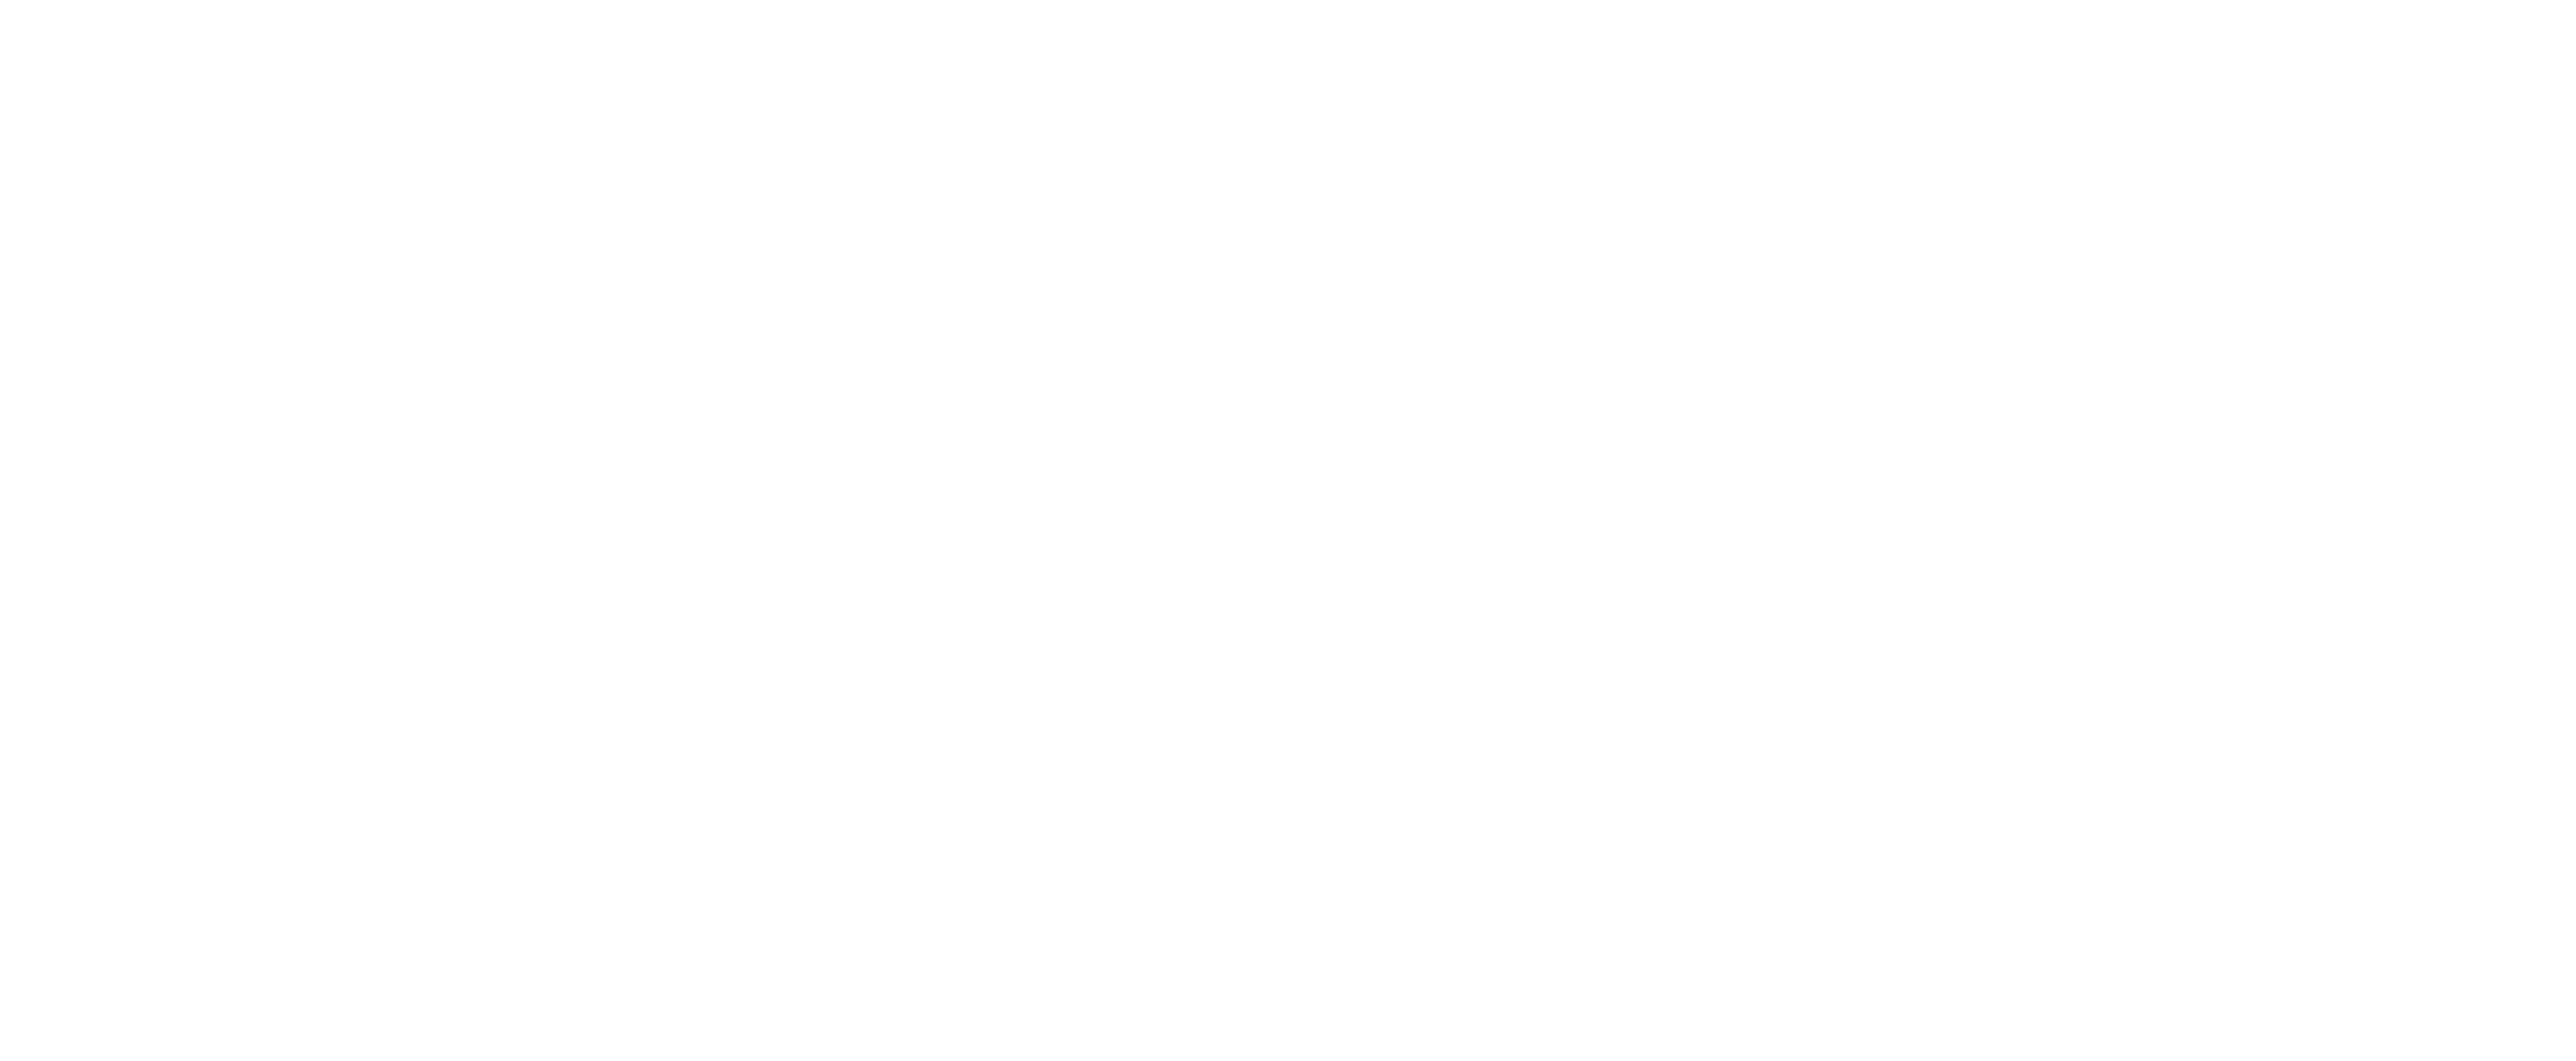 The Clybourn